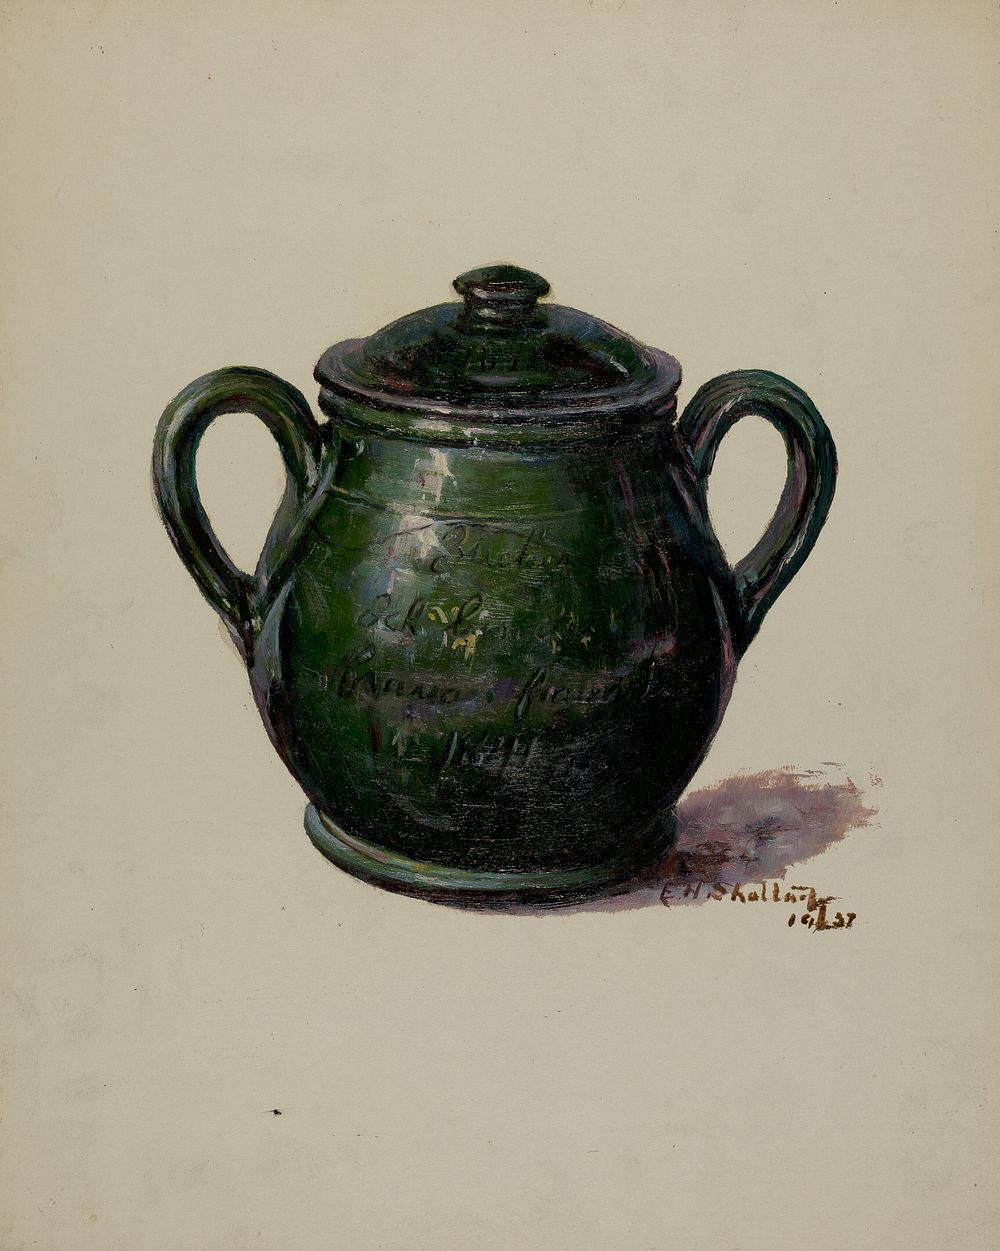 Pa. German Jar (1937) by Eugene Shellady.  